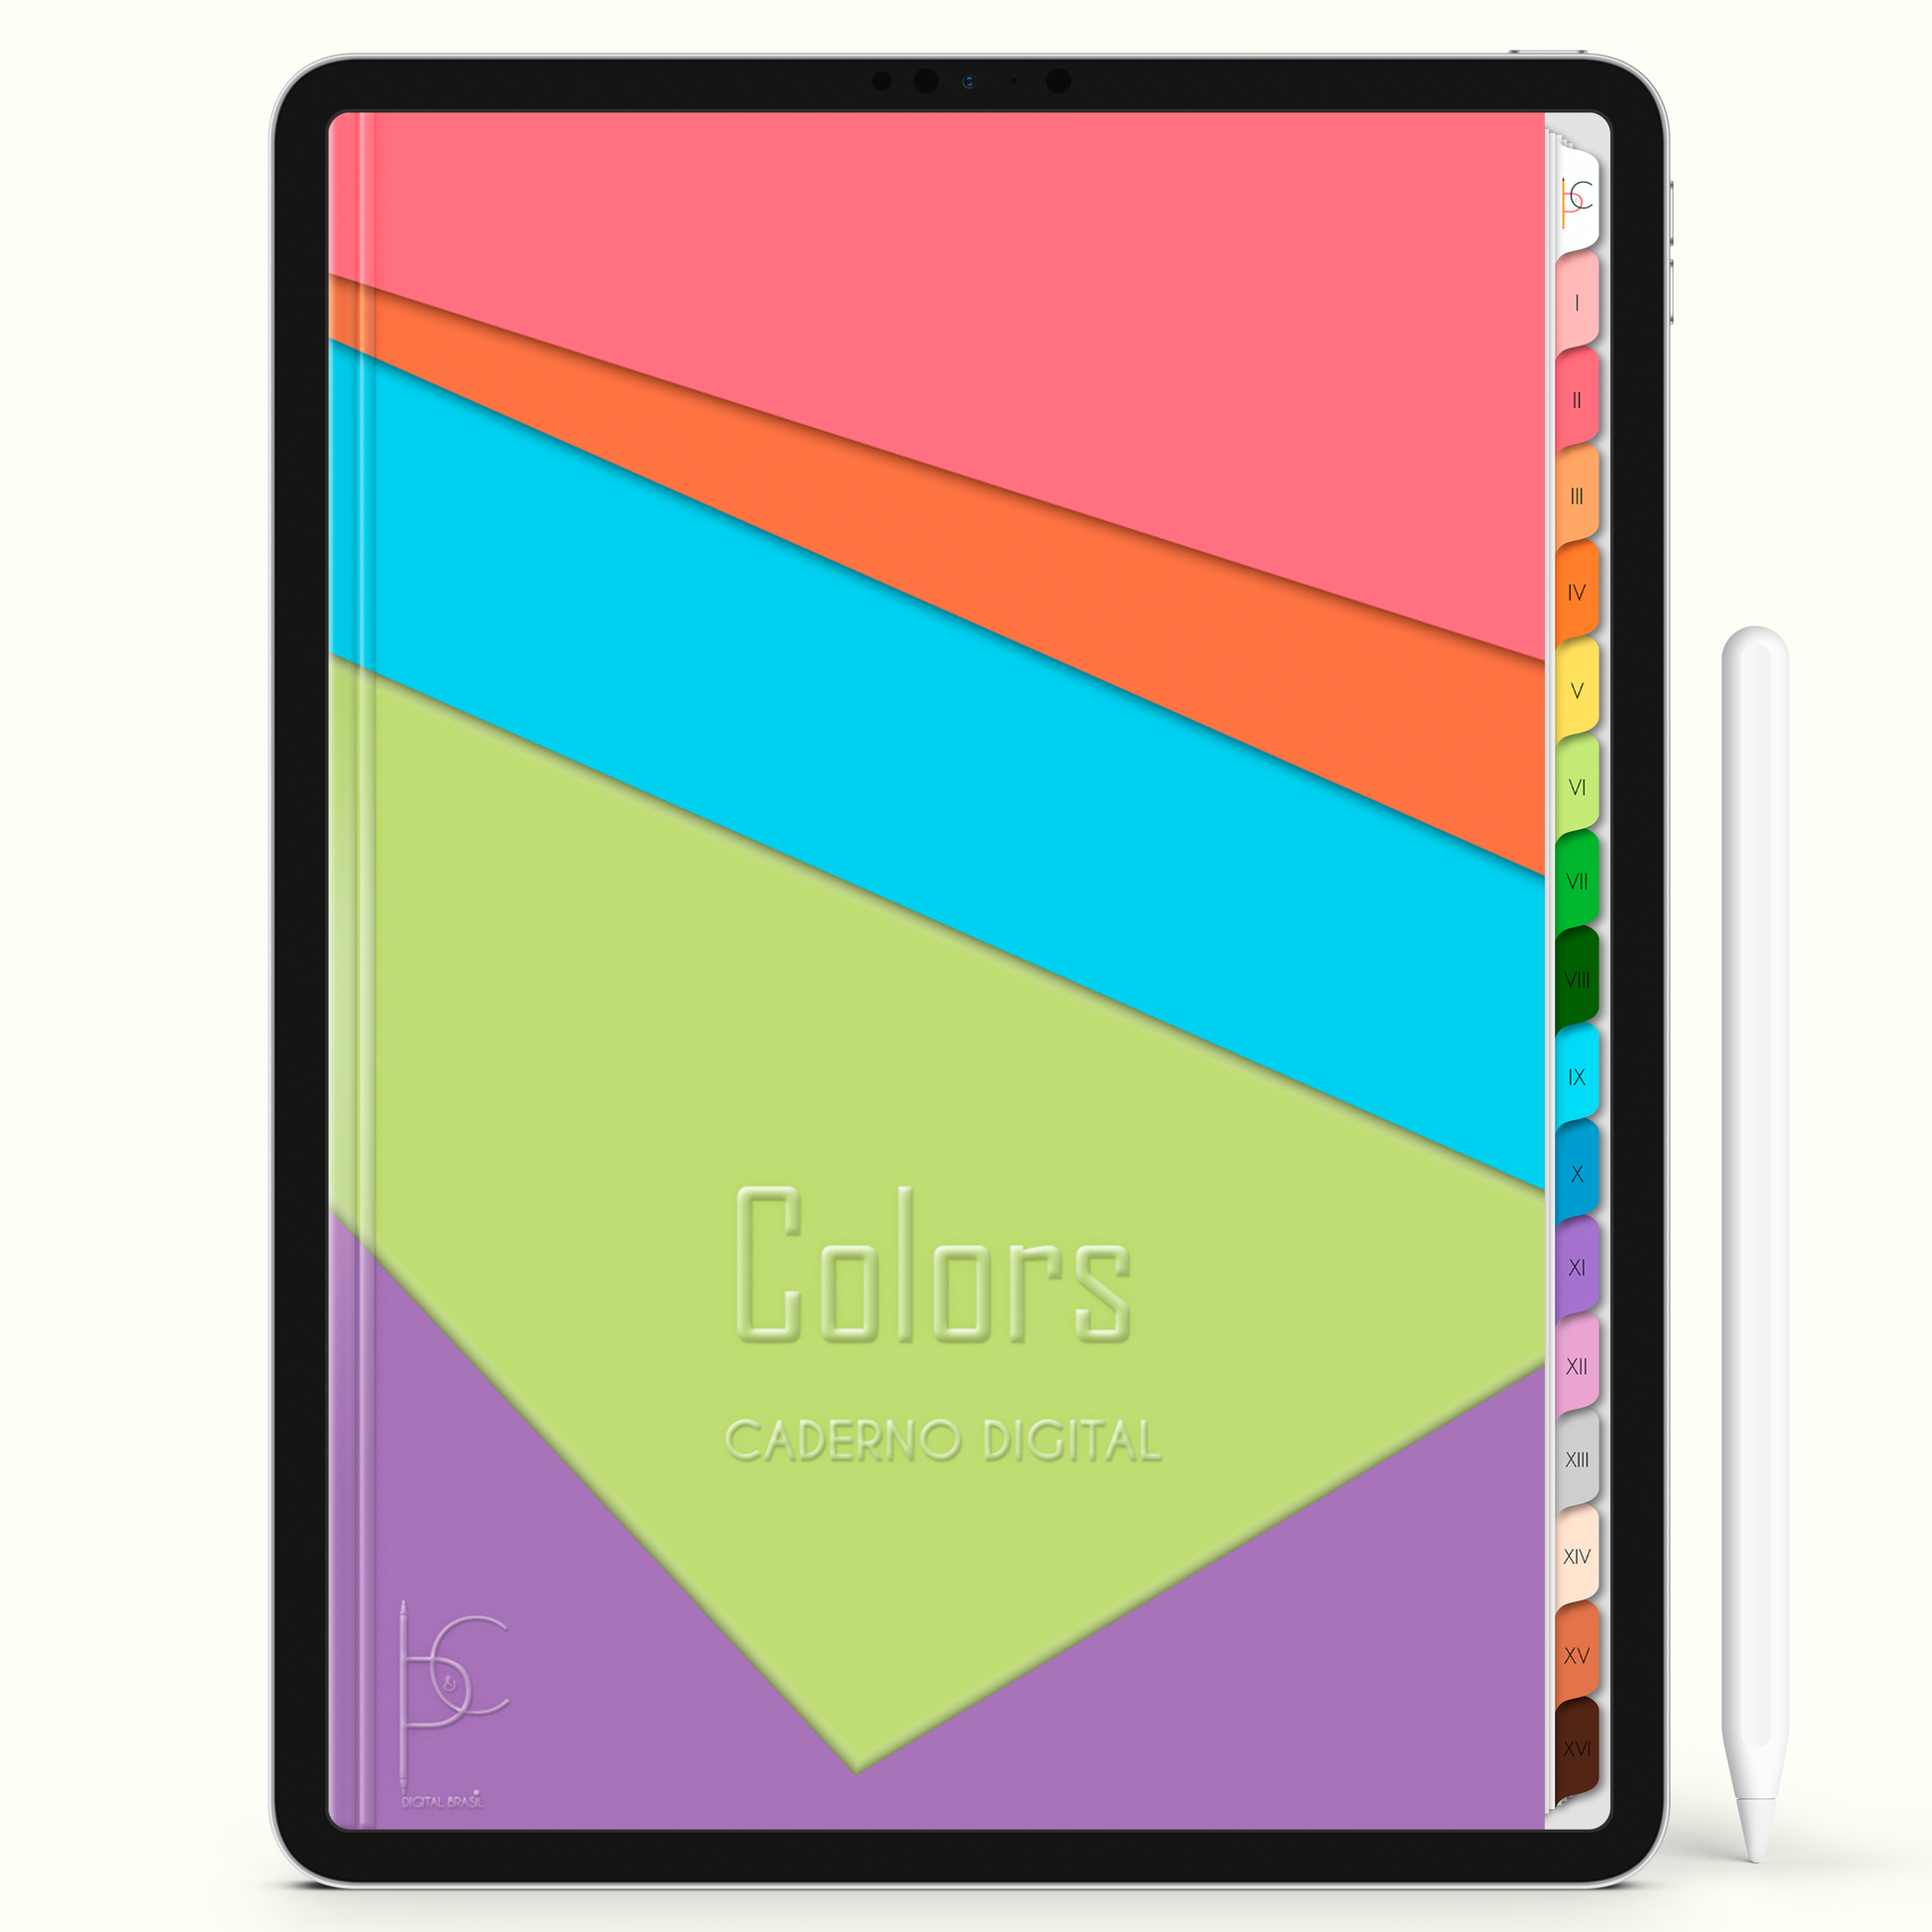 Caderno Digital Colors Note Study 16 Matérias • Para iPad e Tablet Android • Download instantâneo • Sustentável